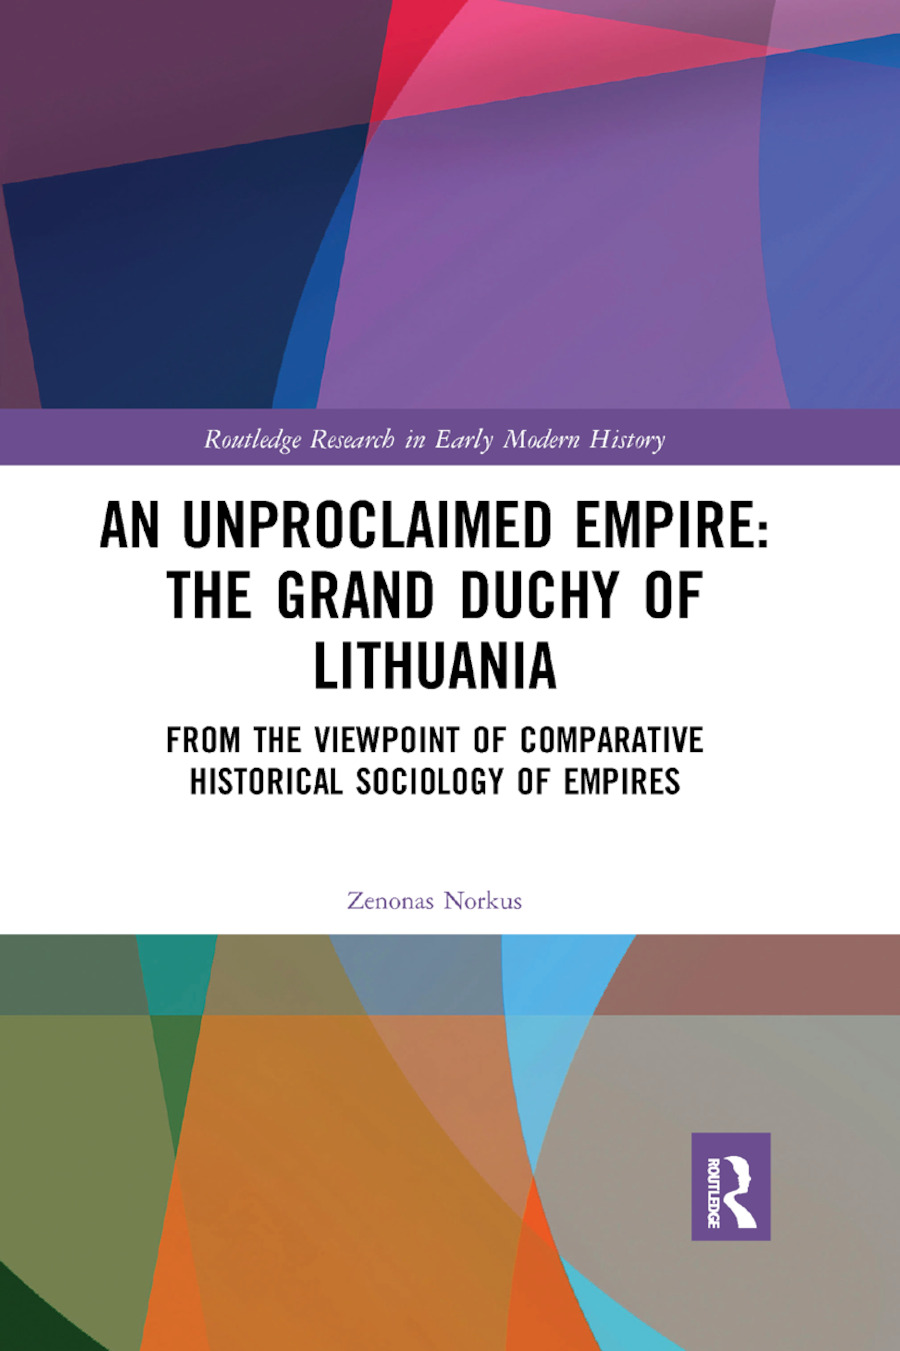 Norkus, Z: An Unproclaimed Empire: The Grand Duchy of Lithua - Zenonas Norkus (Vilnius University, Lithuania)